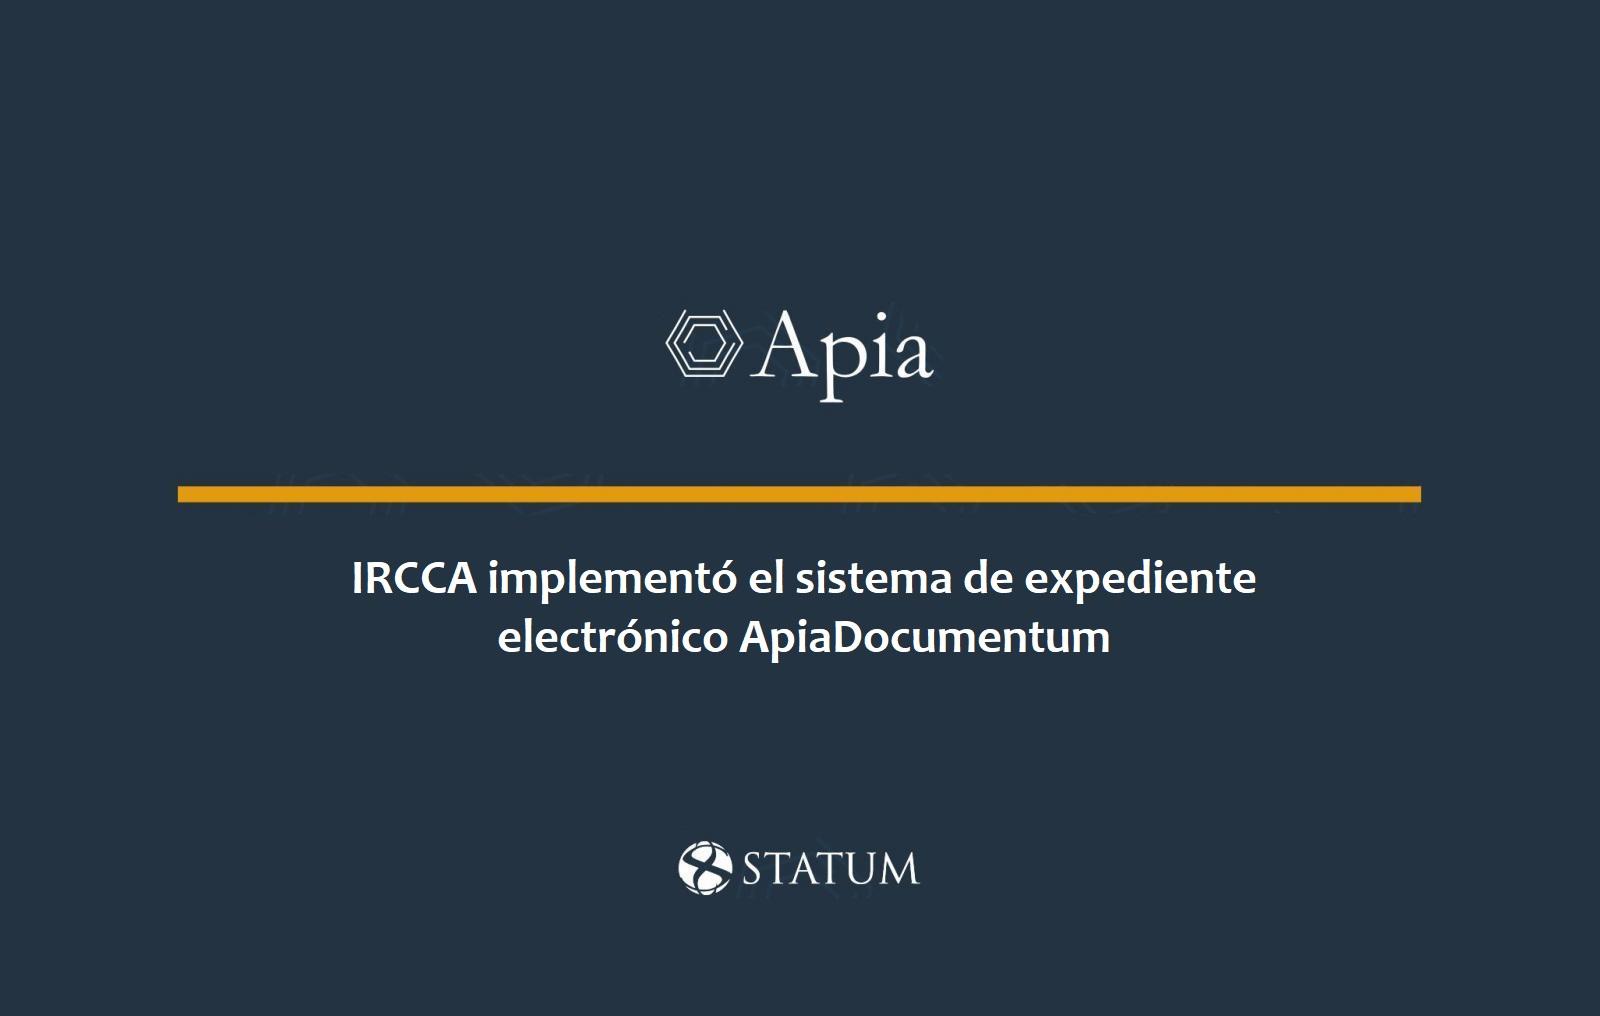 apia-documentum-ircca